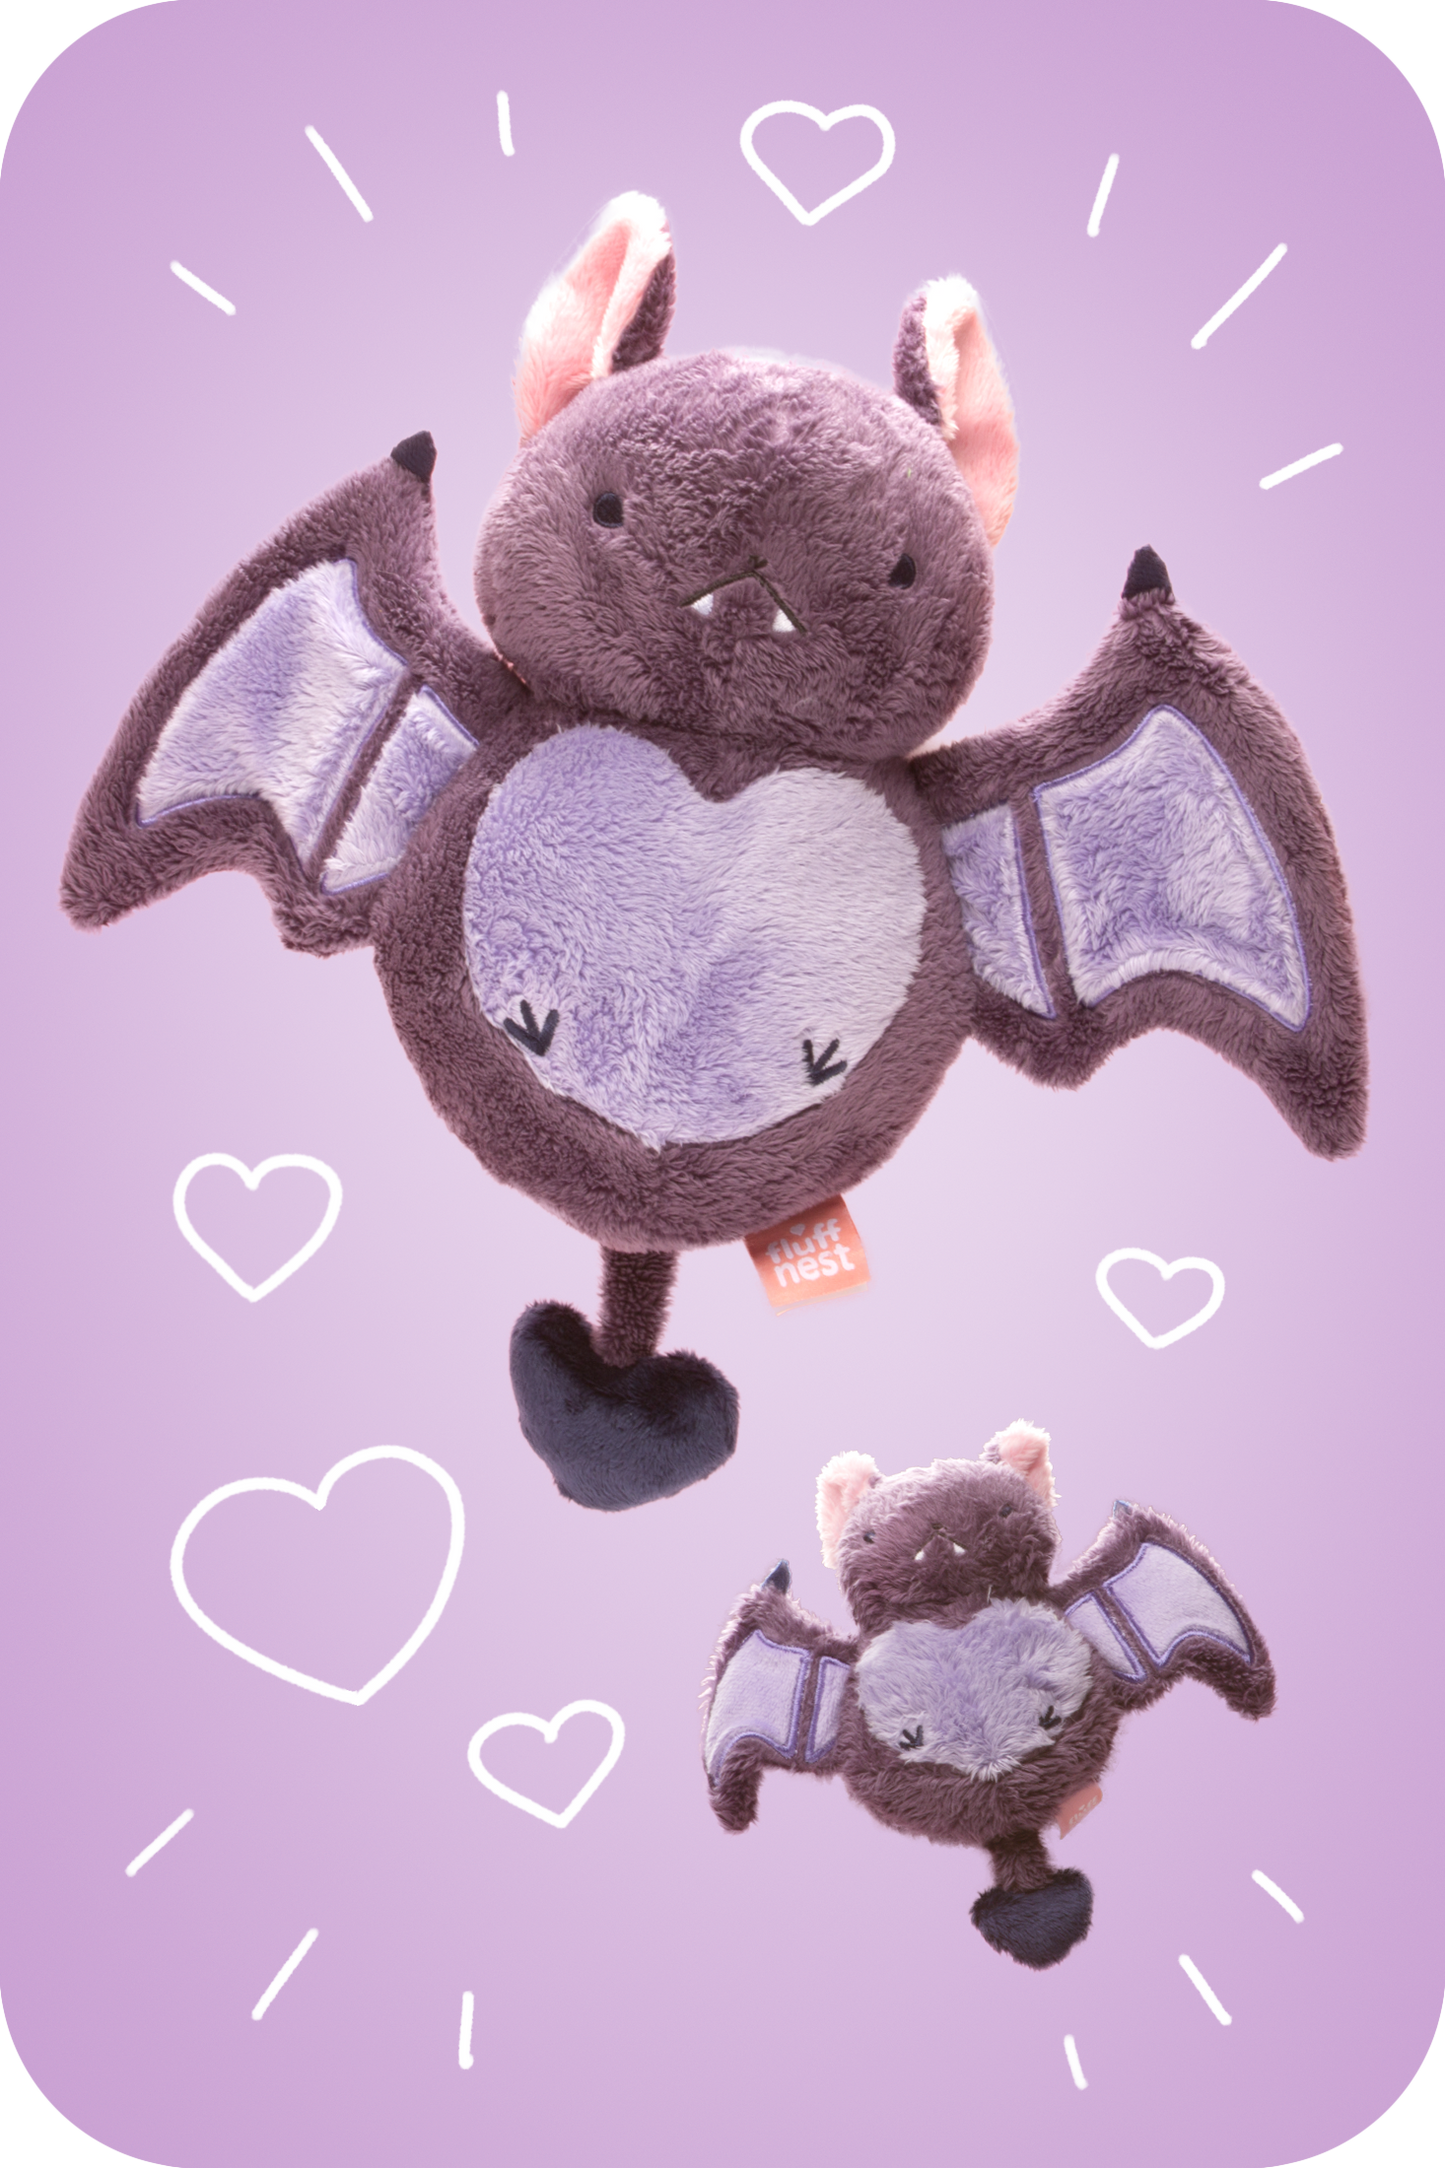 Vinnie the Sweetheart Bat